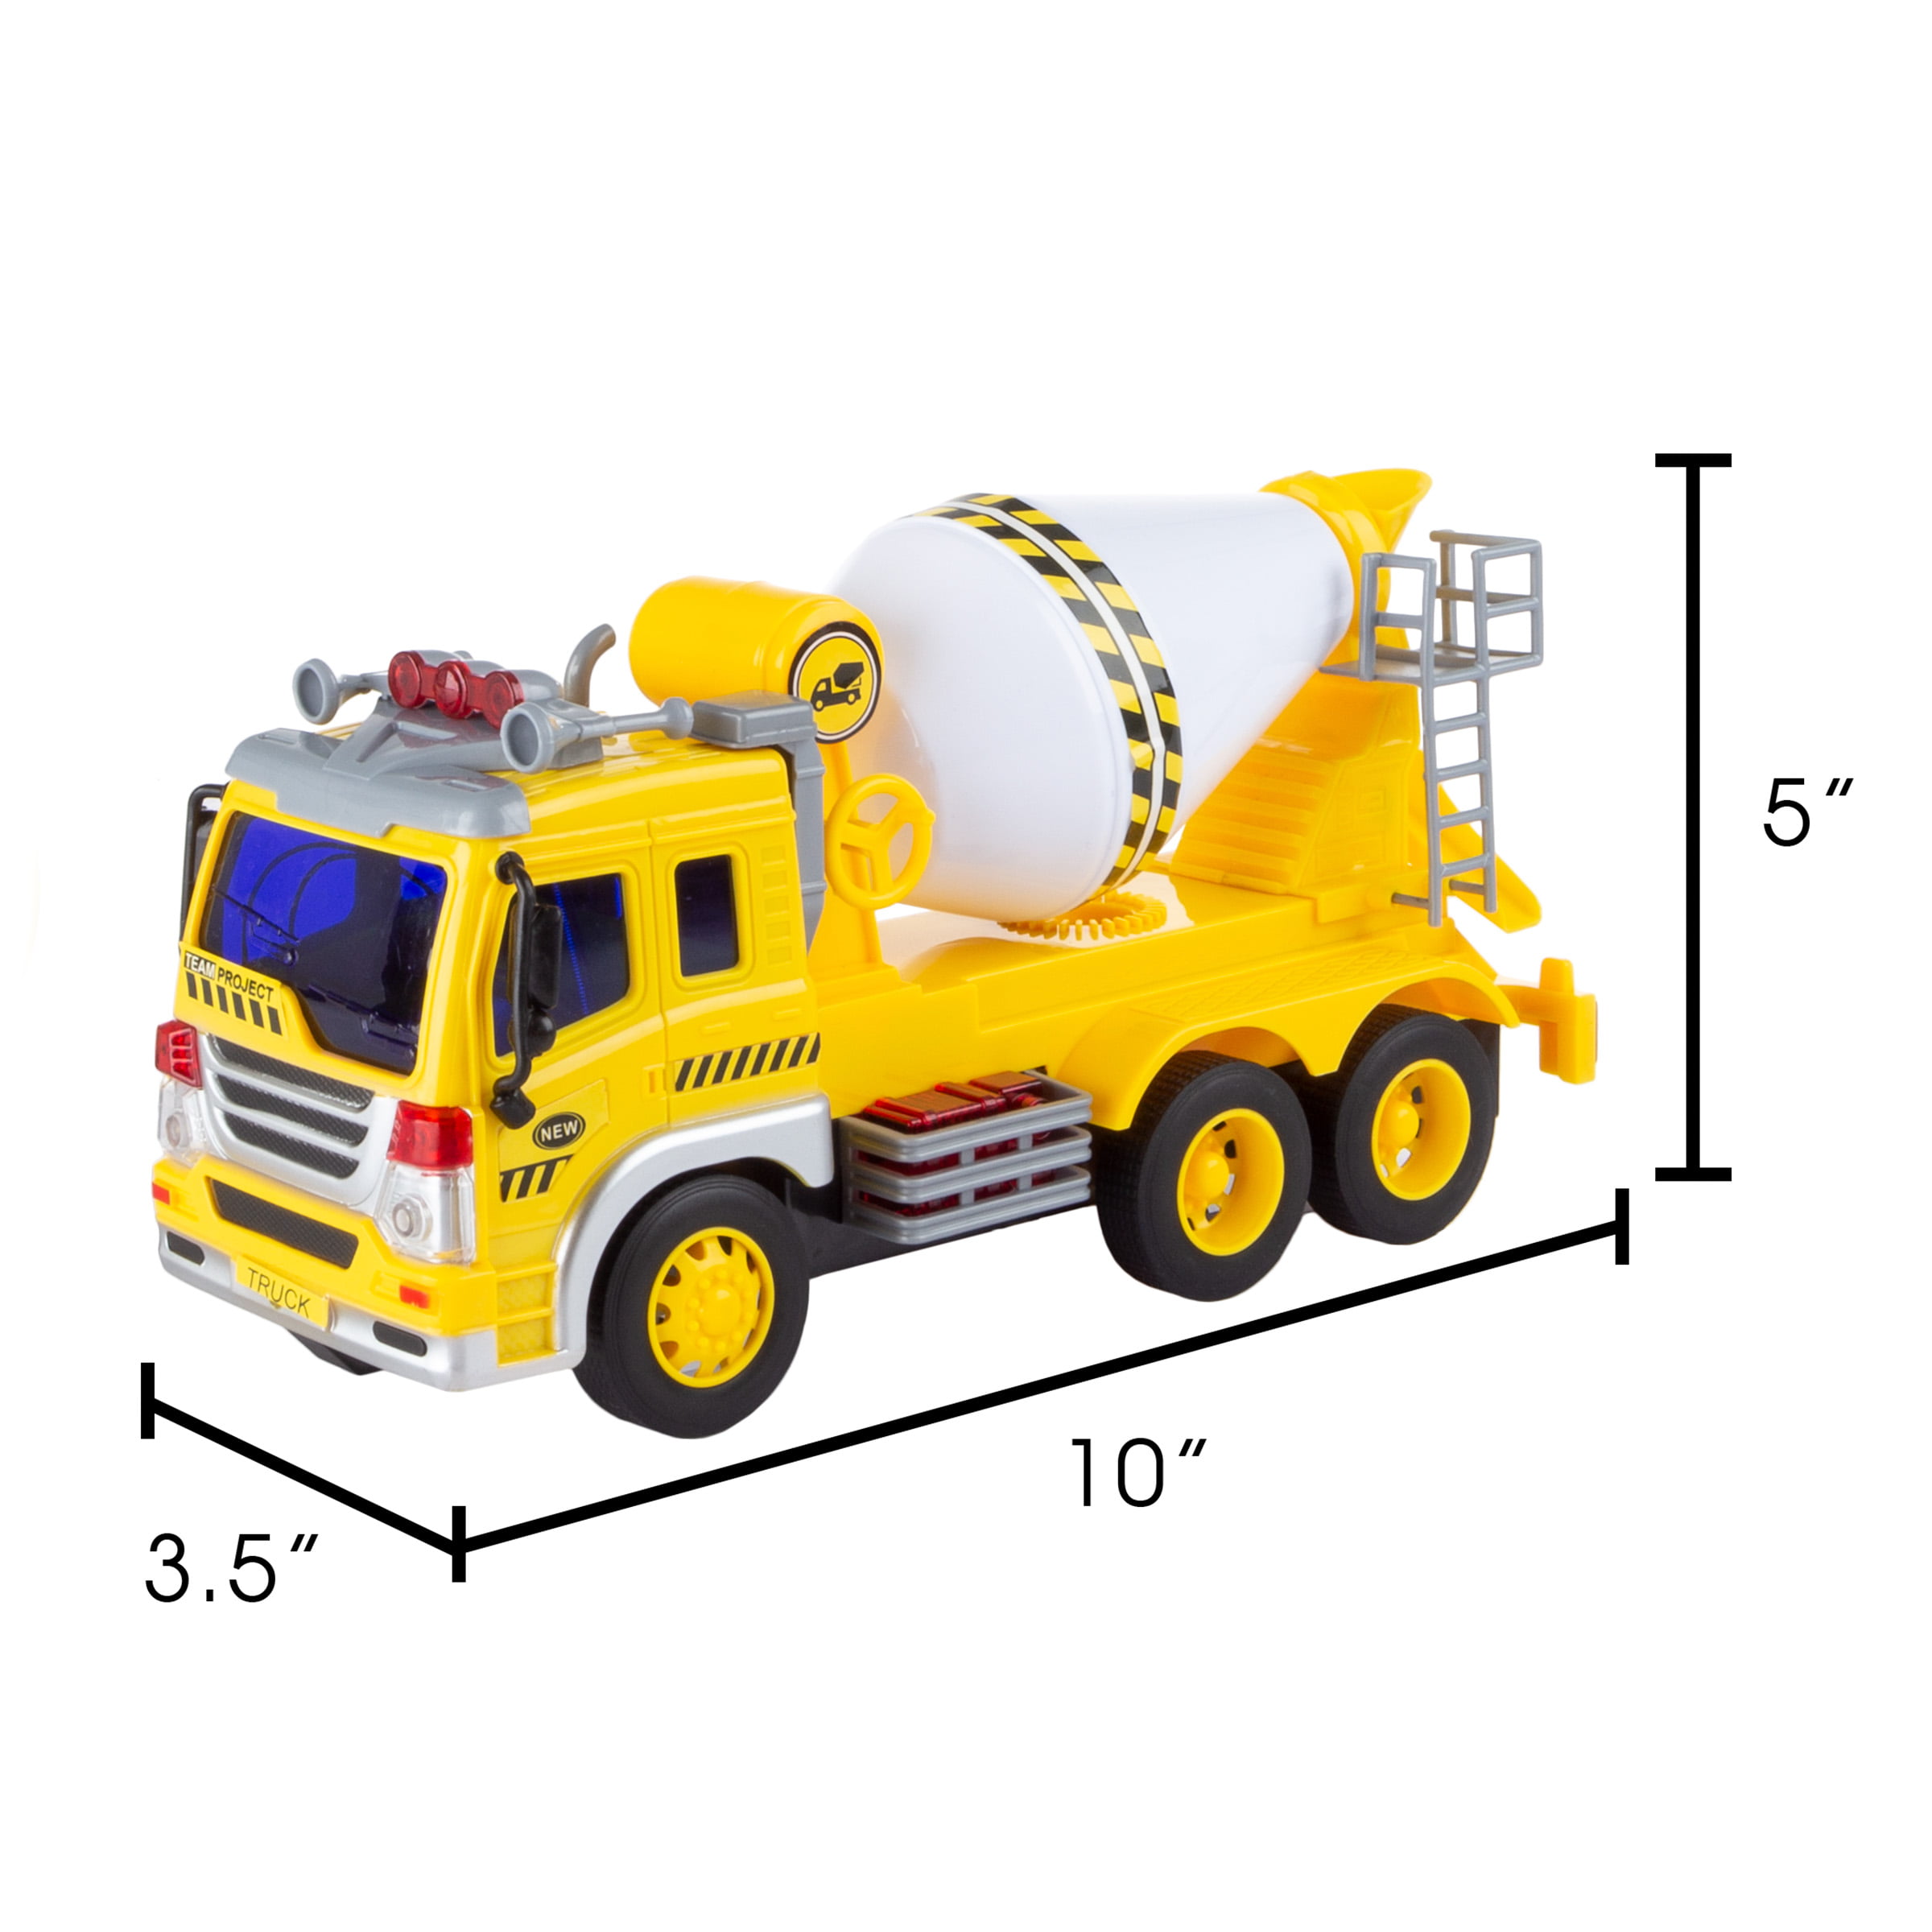 Details about   RC Bulldozer RC Dump Truck RC Crane Excavator RC Mixture Truck Electric Toys